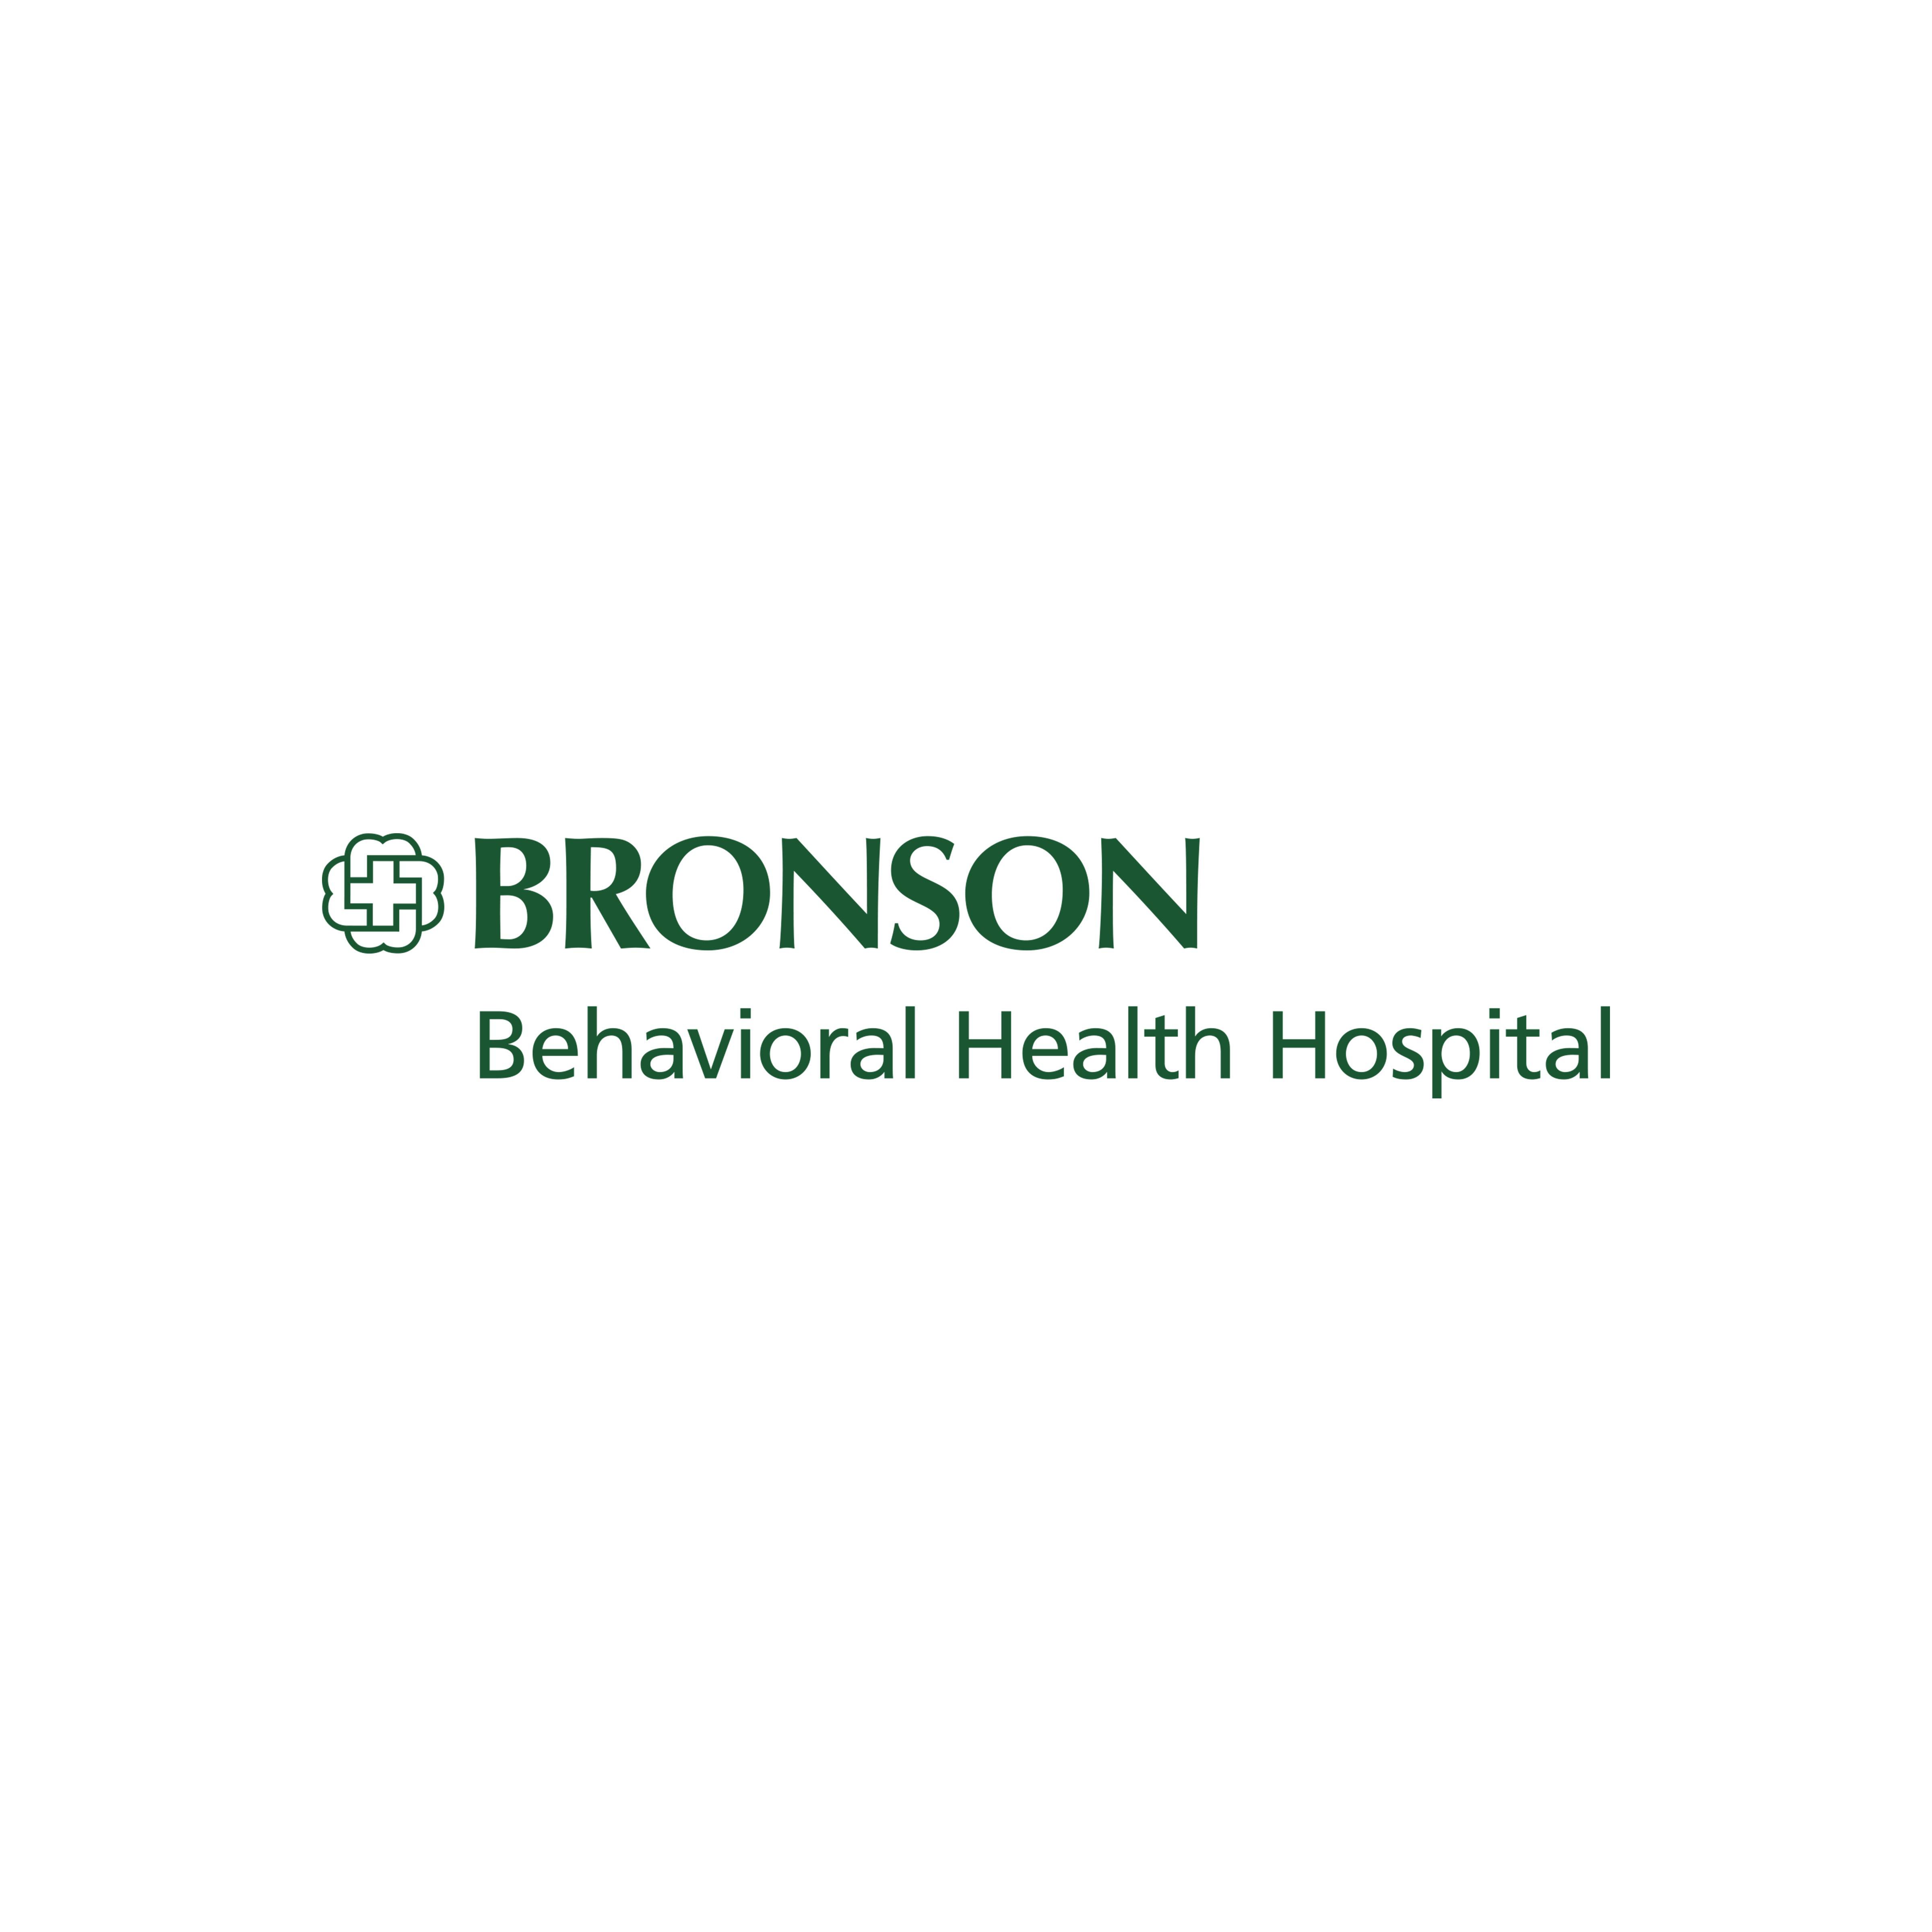 Bronson Behavioral Health Hospital